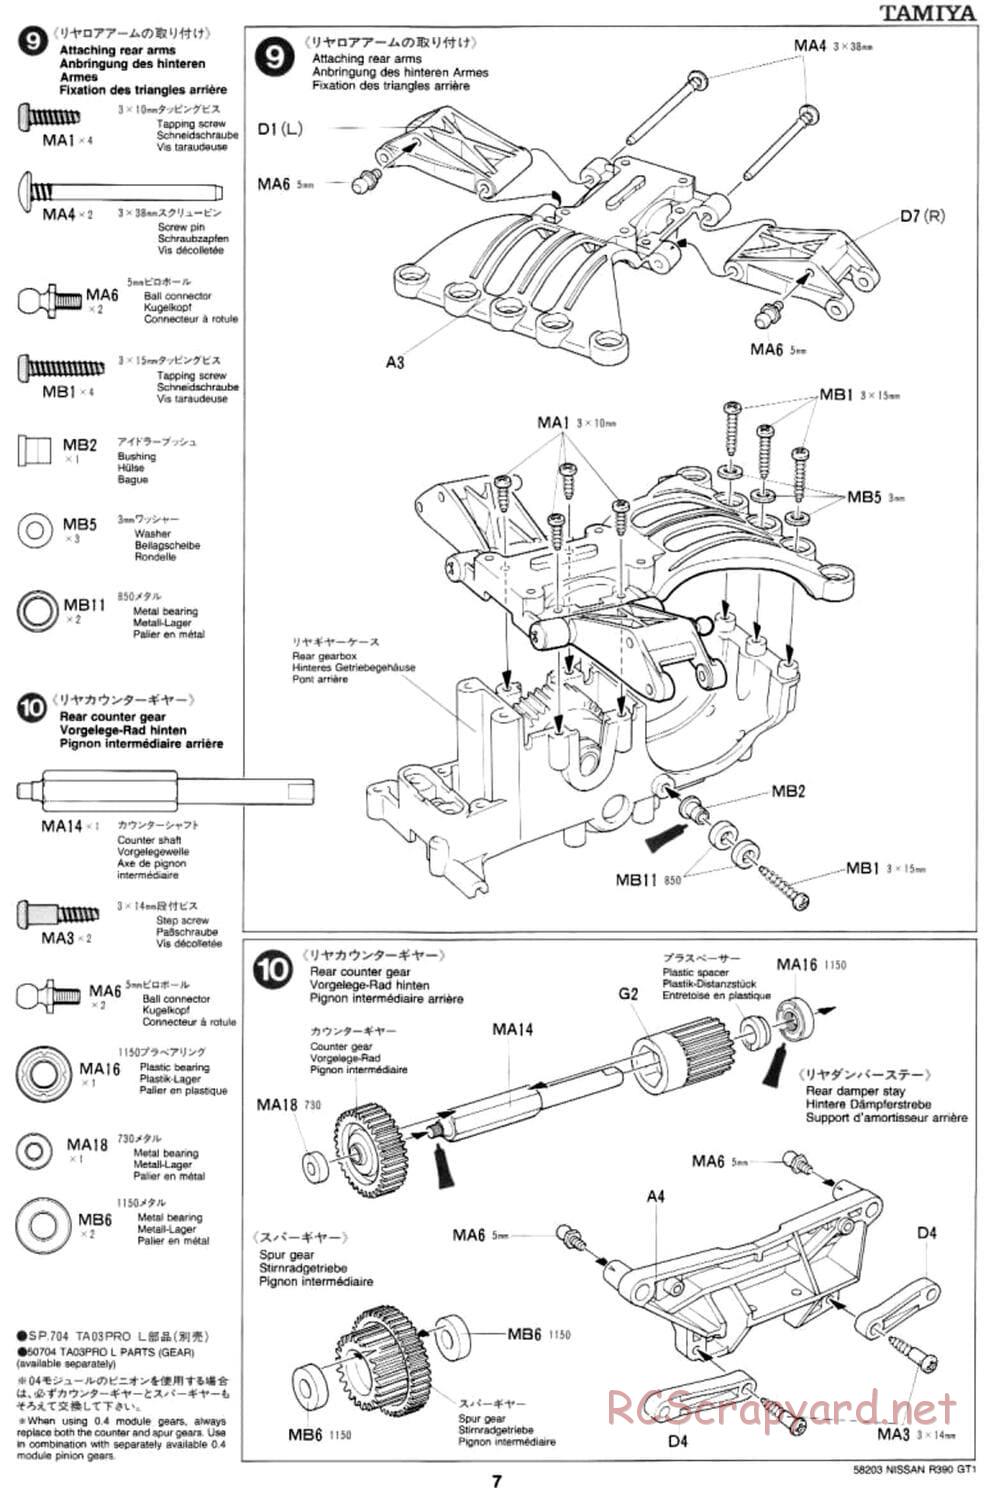 Tamiya - Nissan R390 GT1 - TA-03R Chassis - Manual - Page 7